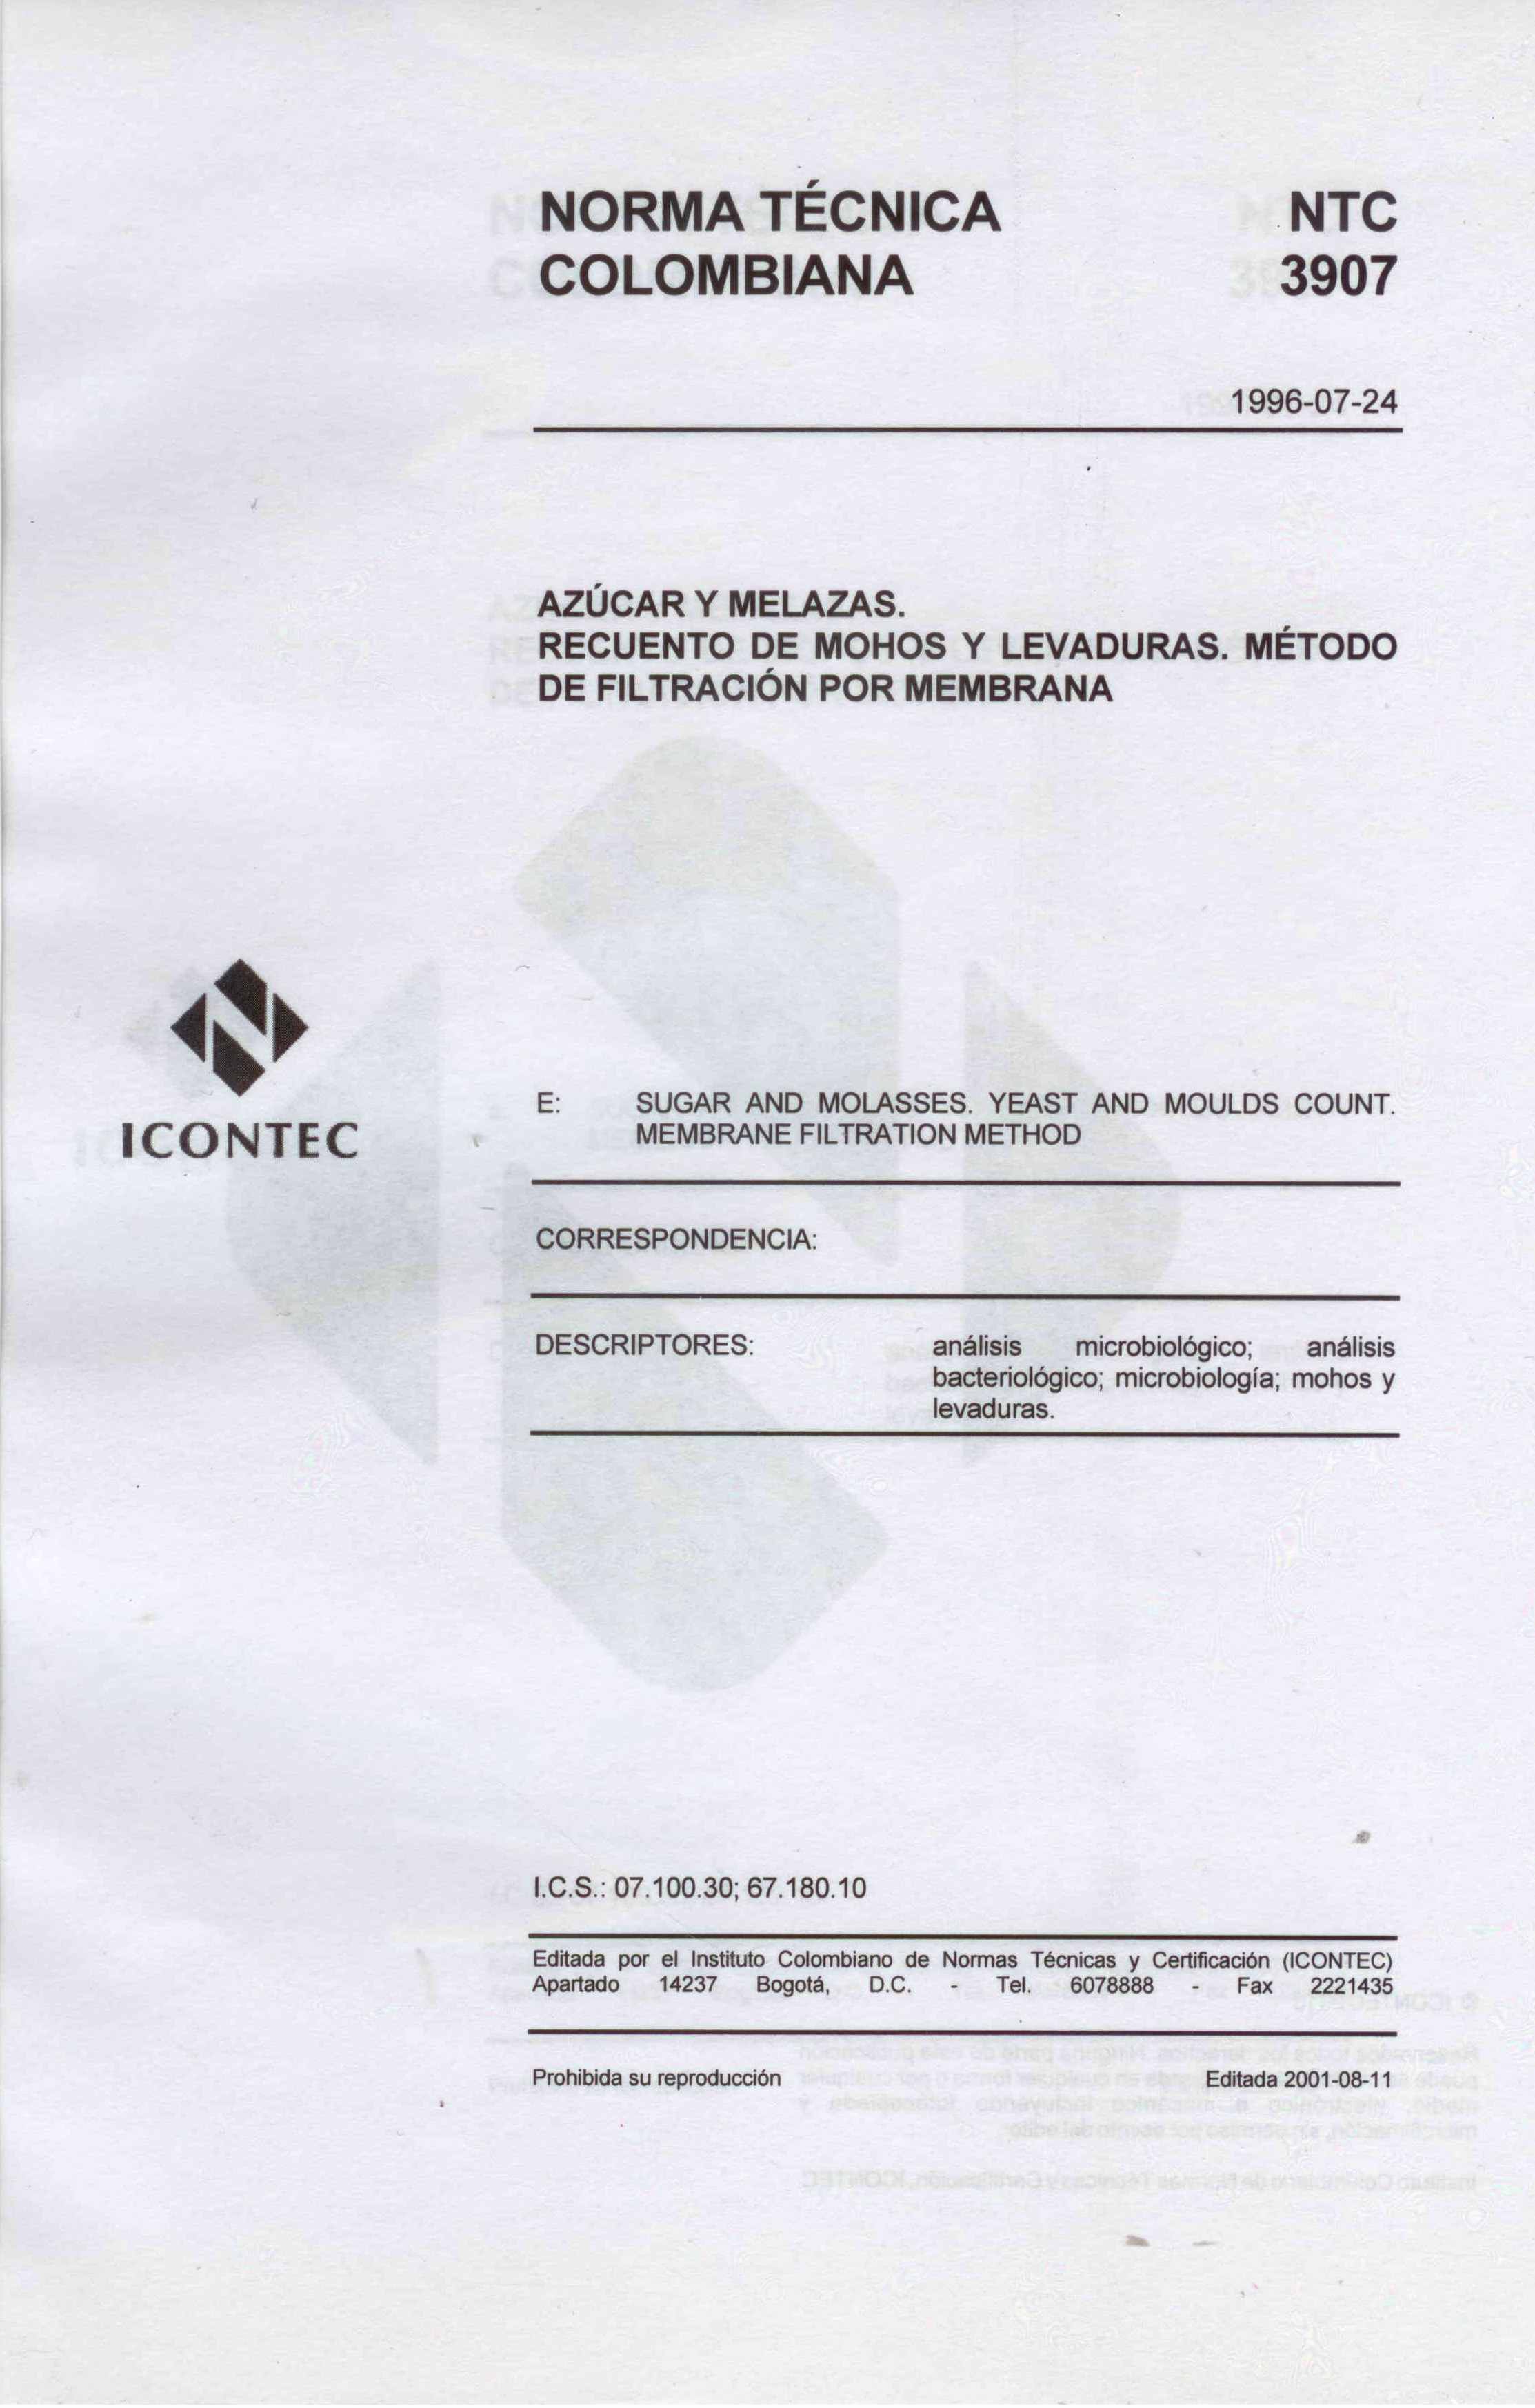 http://www.cenicana.org/investigacion/seica/imagenes_libros/2011/NTC3907/Caratula.jpg